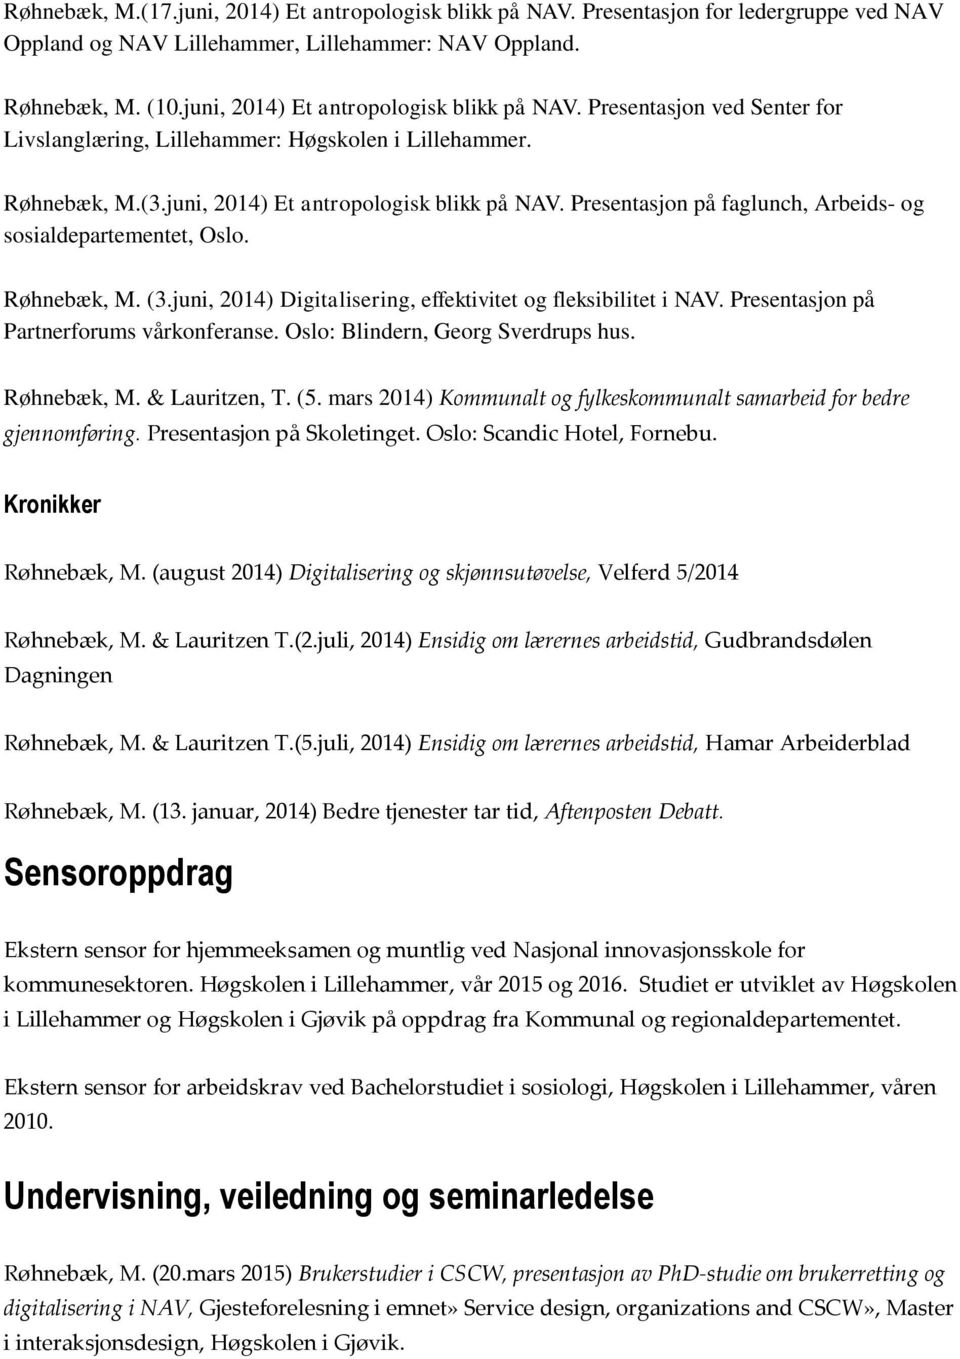 Røhnebæk, M. (3.juni, 2014) Digitalisering, effektivitet og fleksibilitet i NAV. Presentasjon på Partnerforums vårkonferanse. Oslo: Blindern, Georg Sverdrups hus. Røhnebæk, M. & Lauritzen, T. (5.